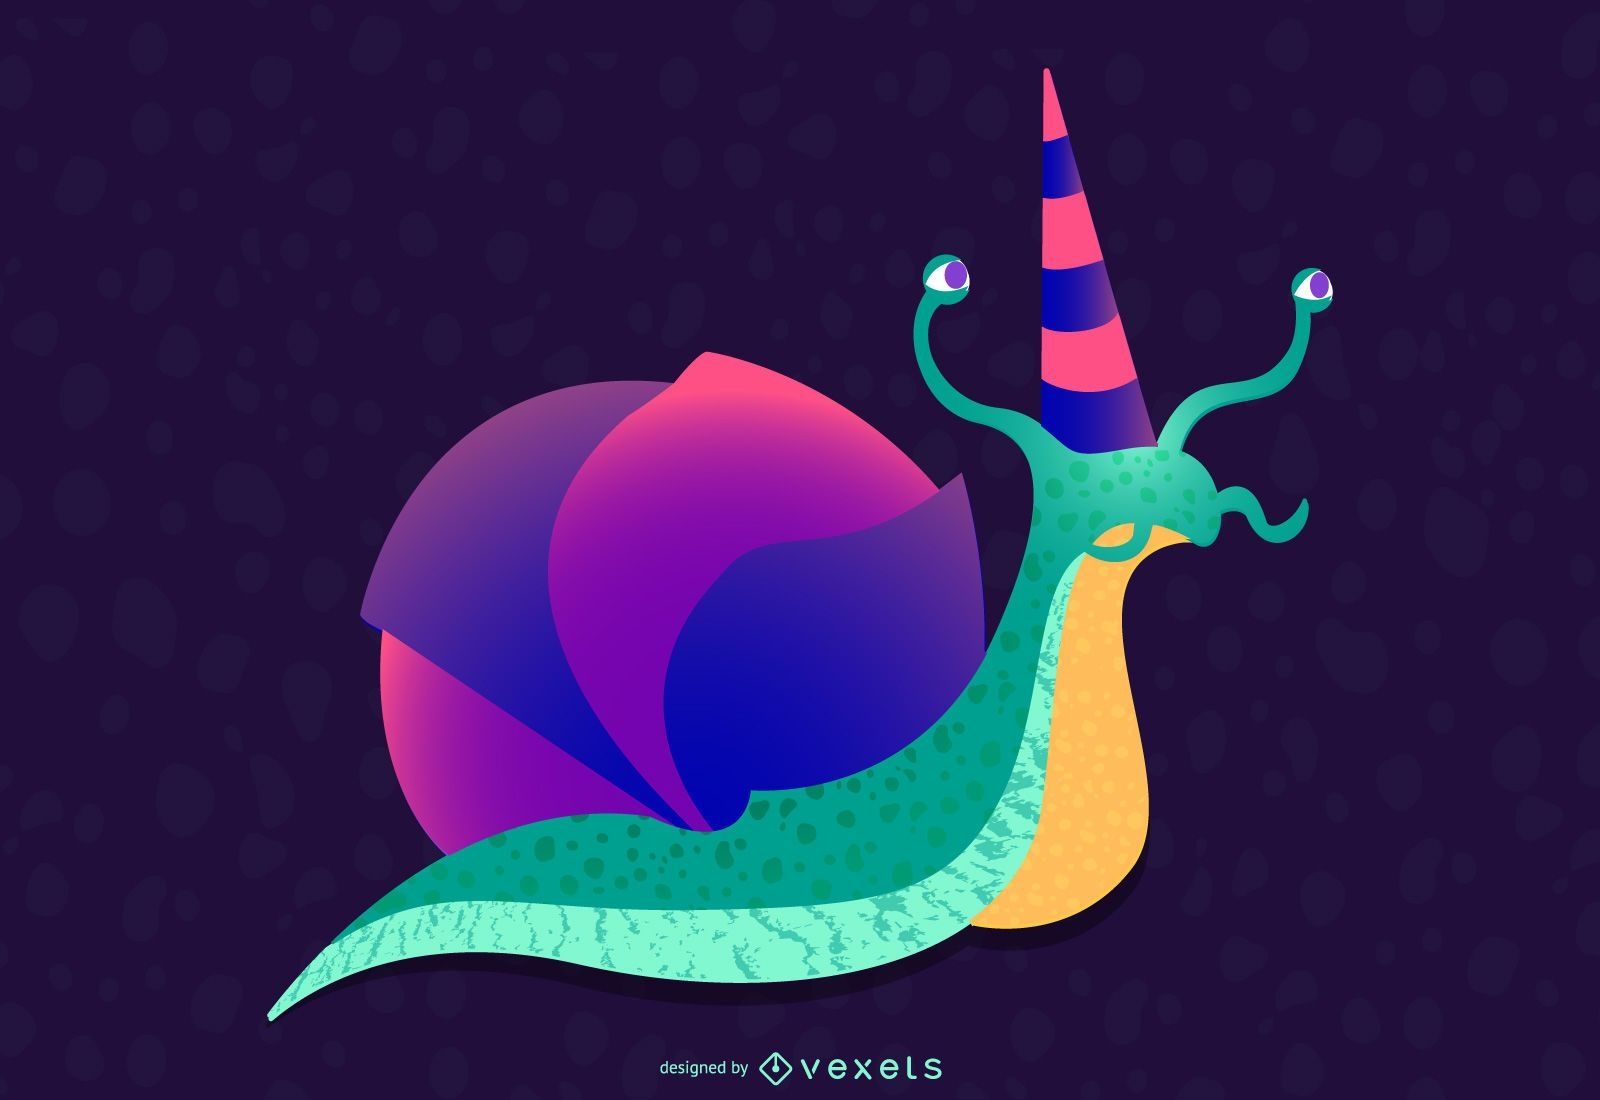 Birthday snail illustration design